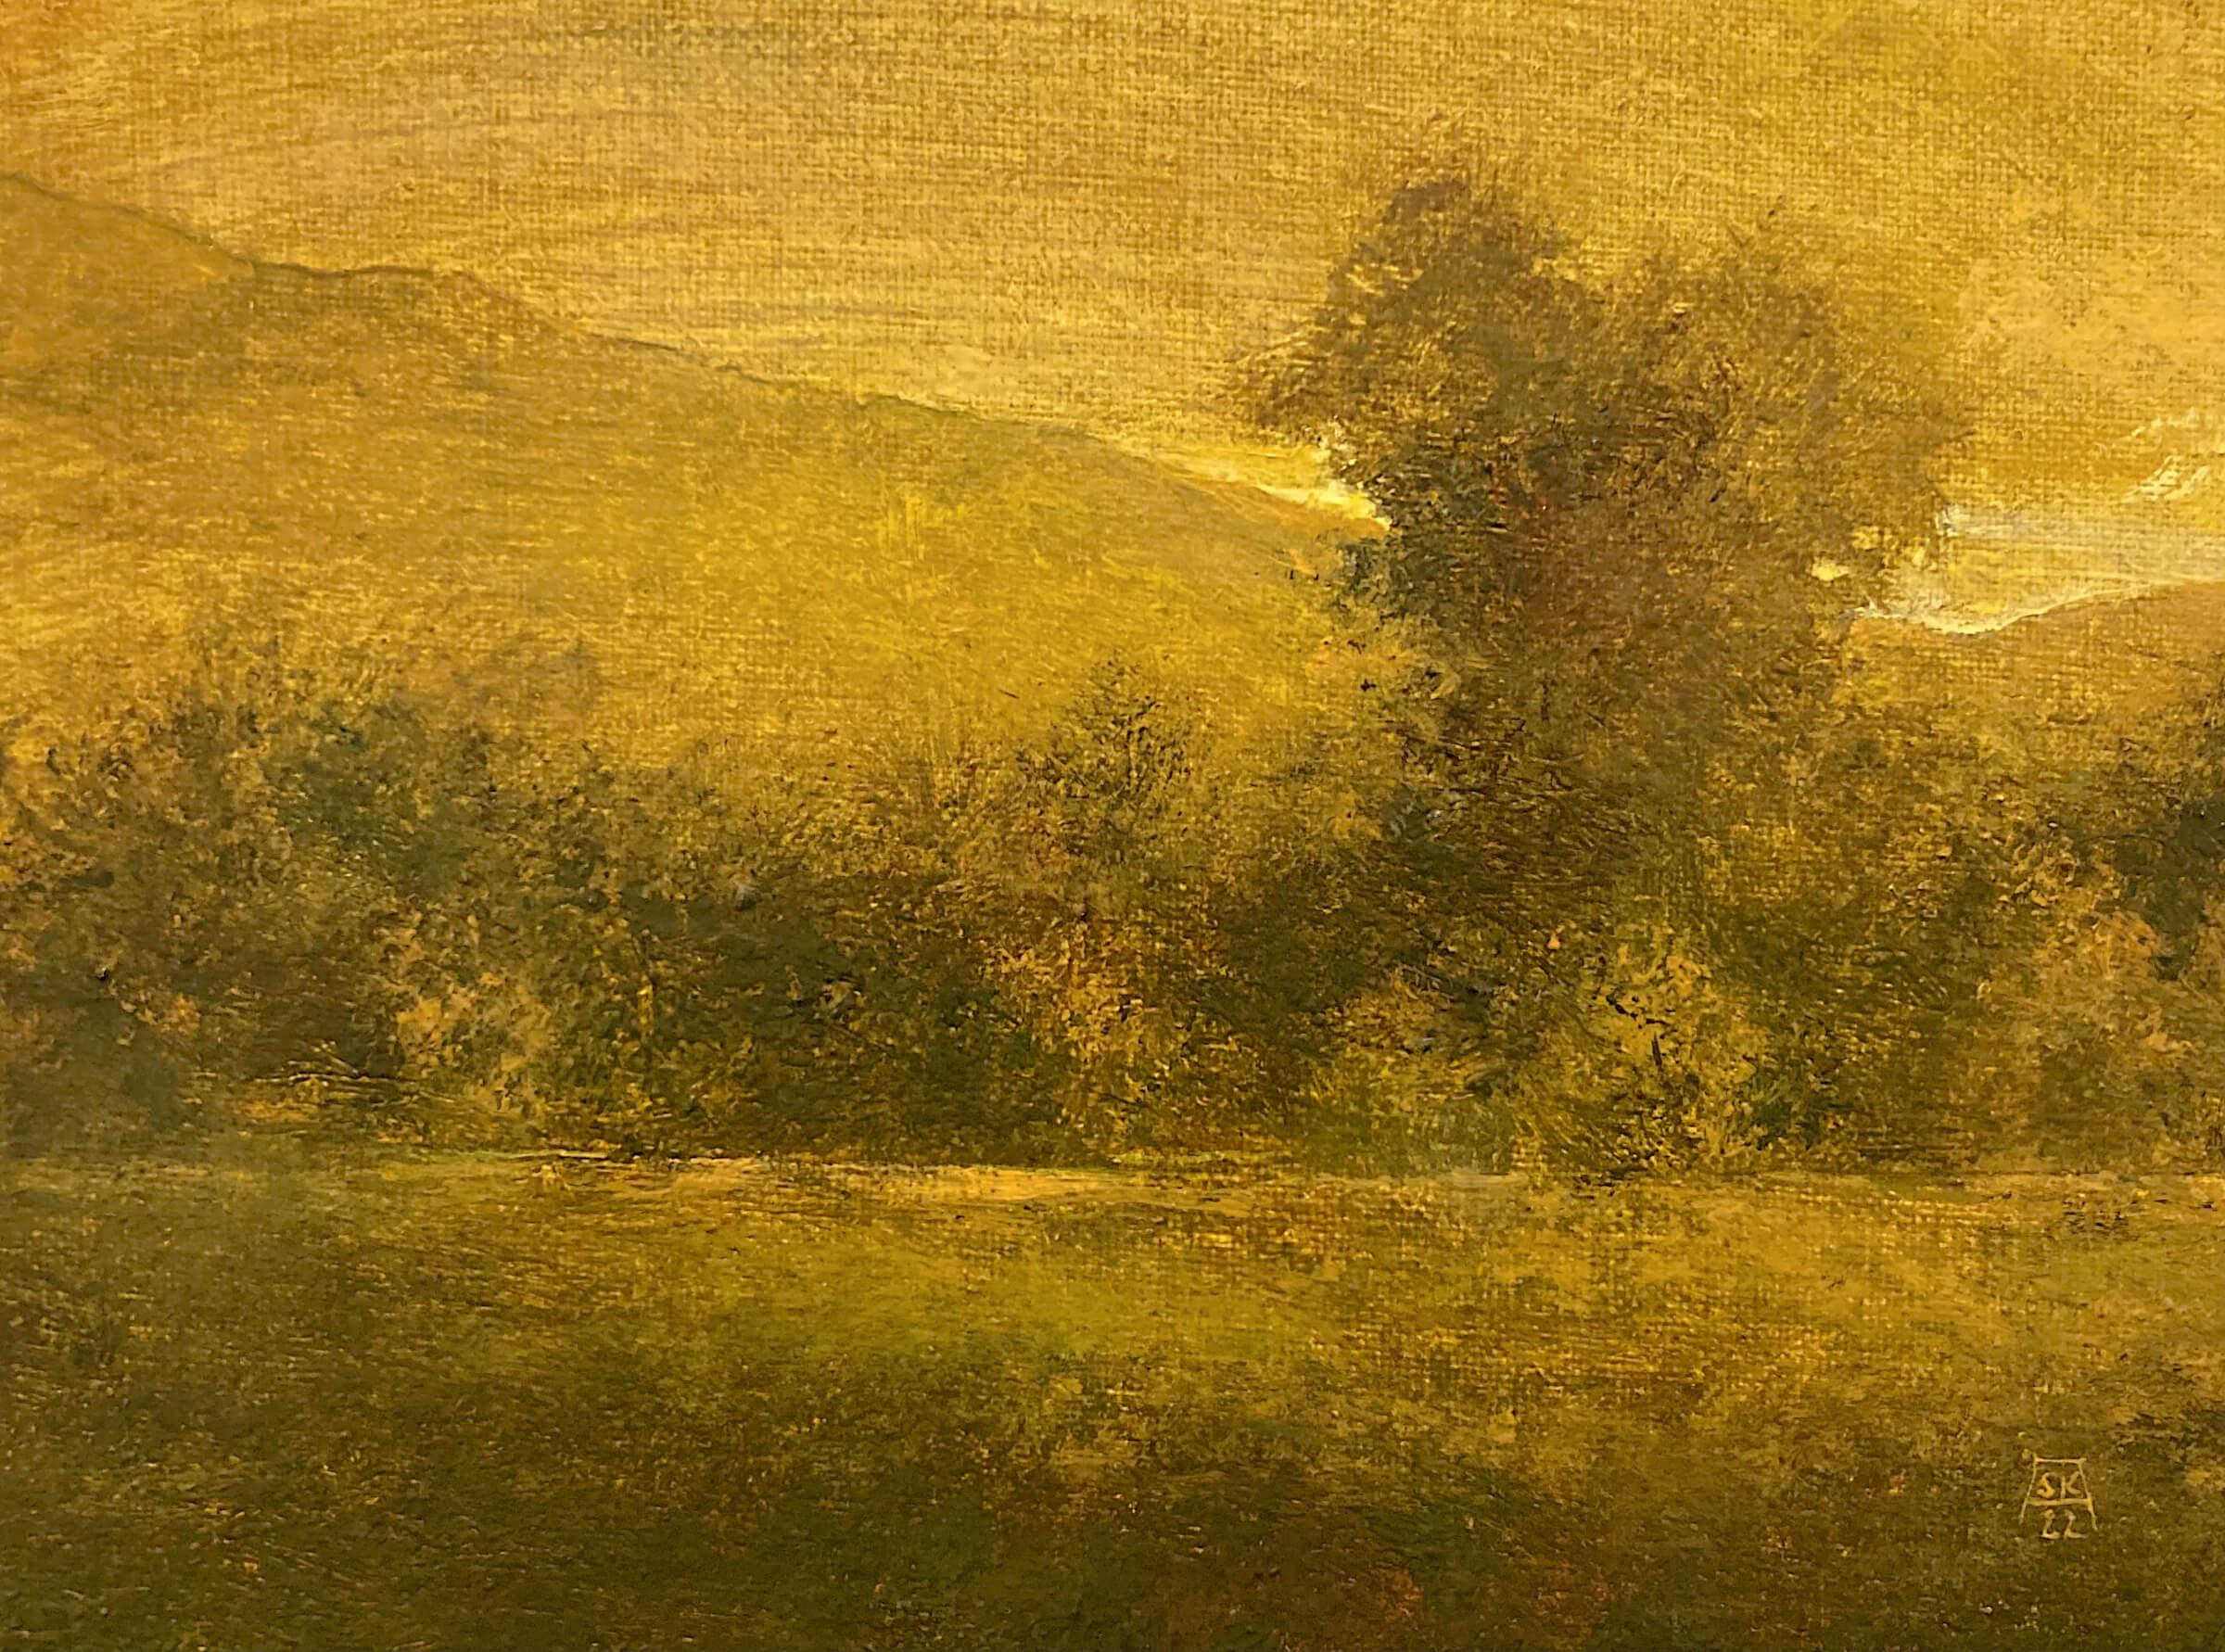 Shawn Krueger Landscape Painting - It Was a Land of Plenty, Original Oil Painting